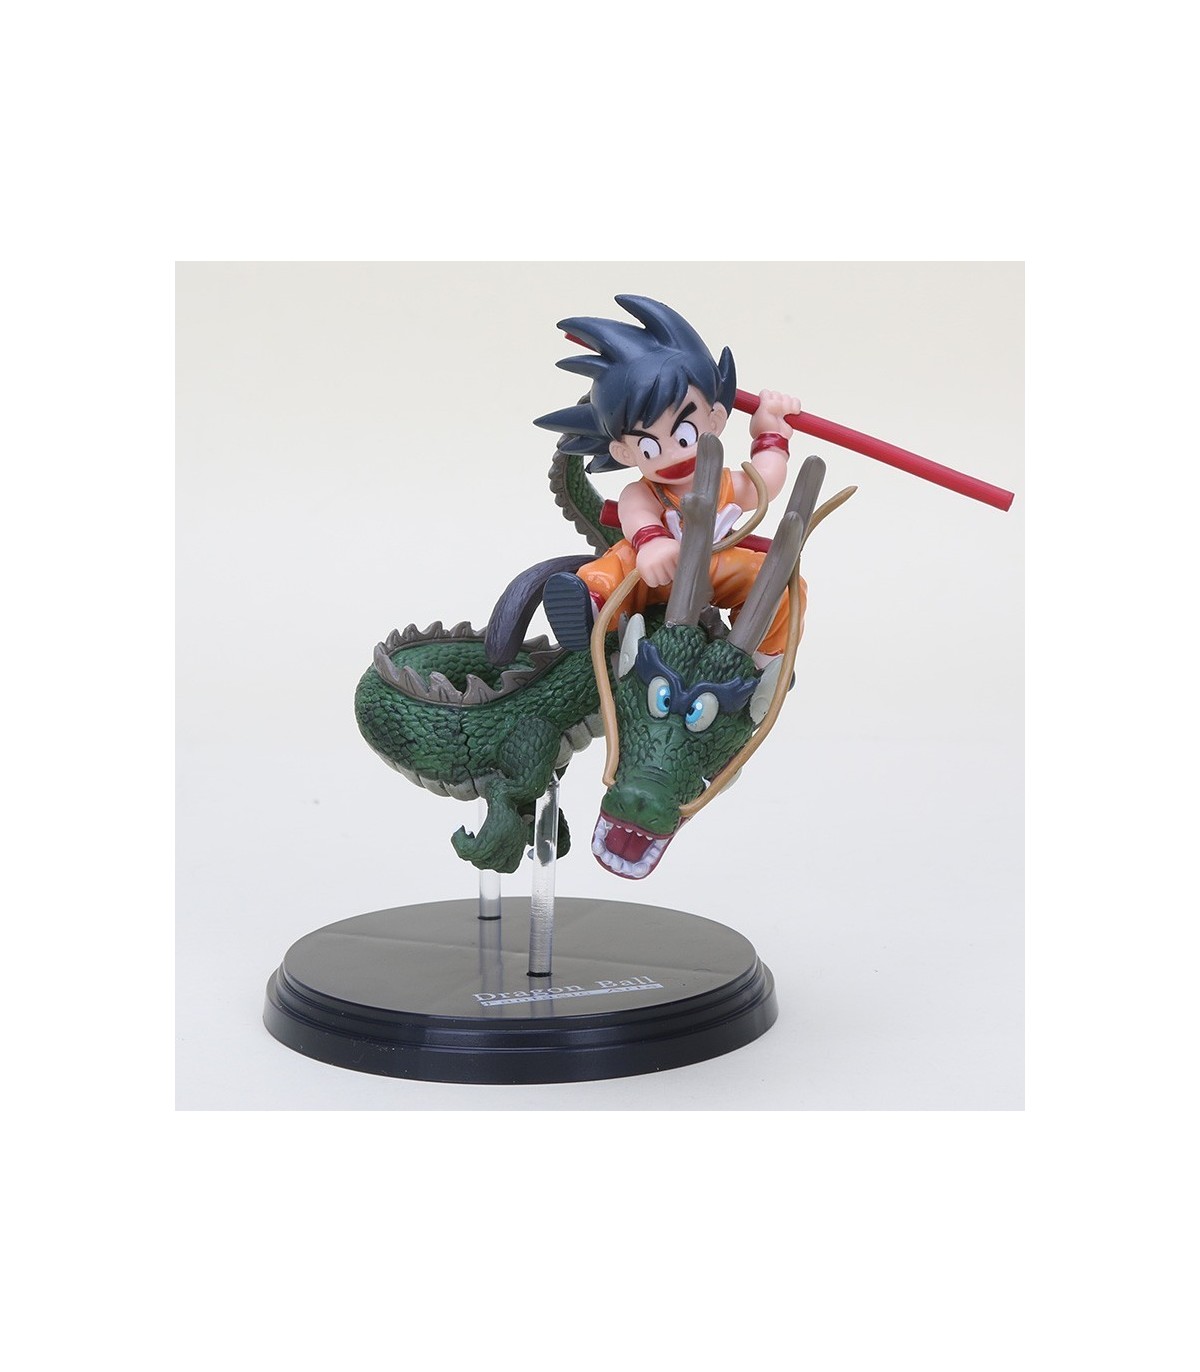 Ambiguo bruja Fraseología Compra ya tu Dragon Ball Z Super Saiyan Goku with Dragon Riding action  figures toy por solo 20,99 €